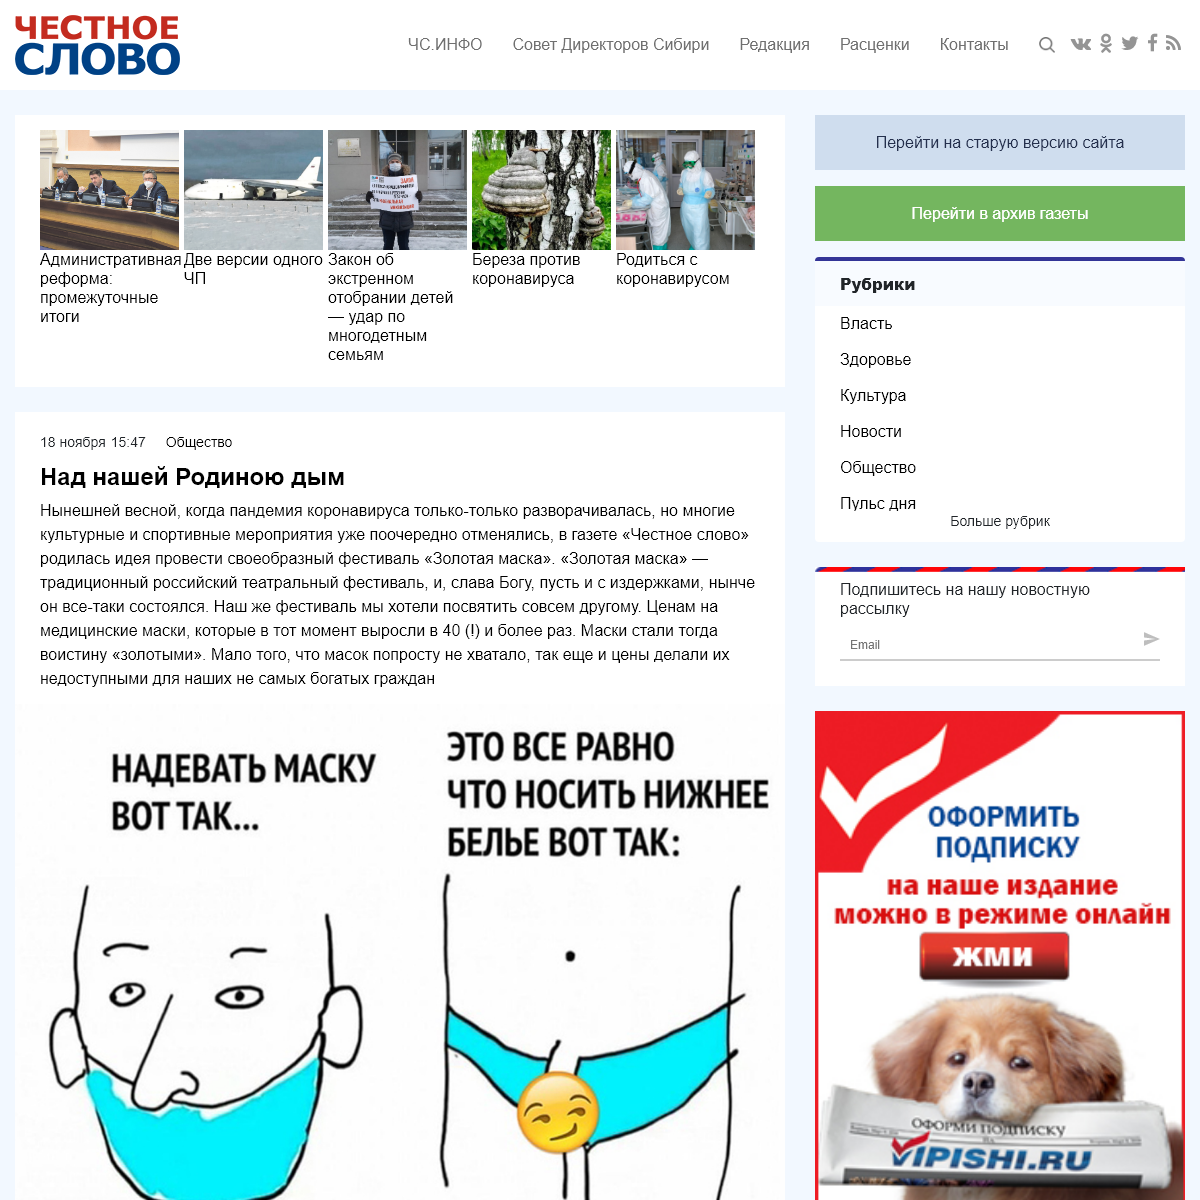 A complete backup of chslovo.com